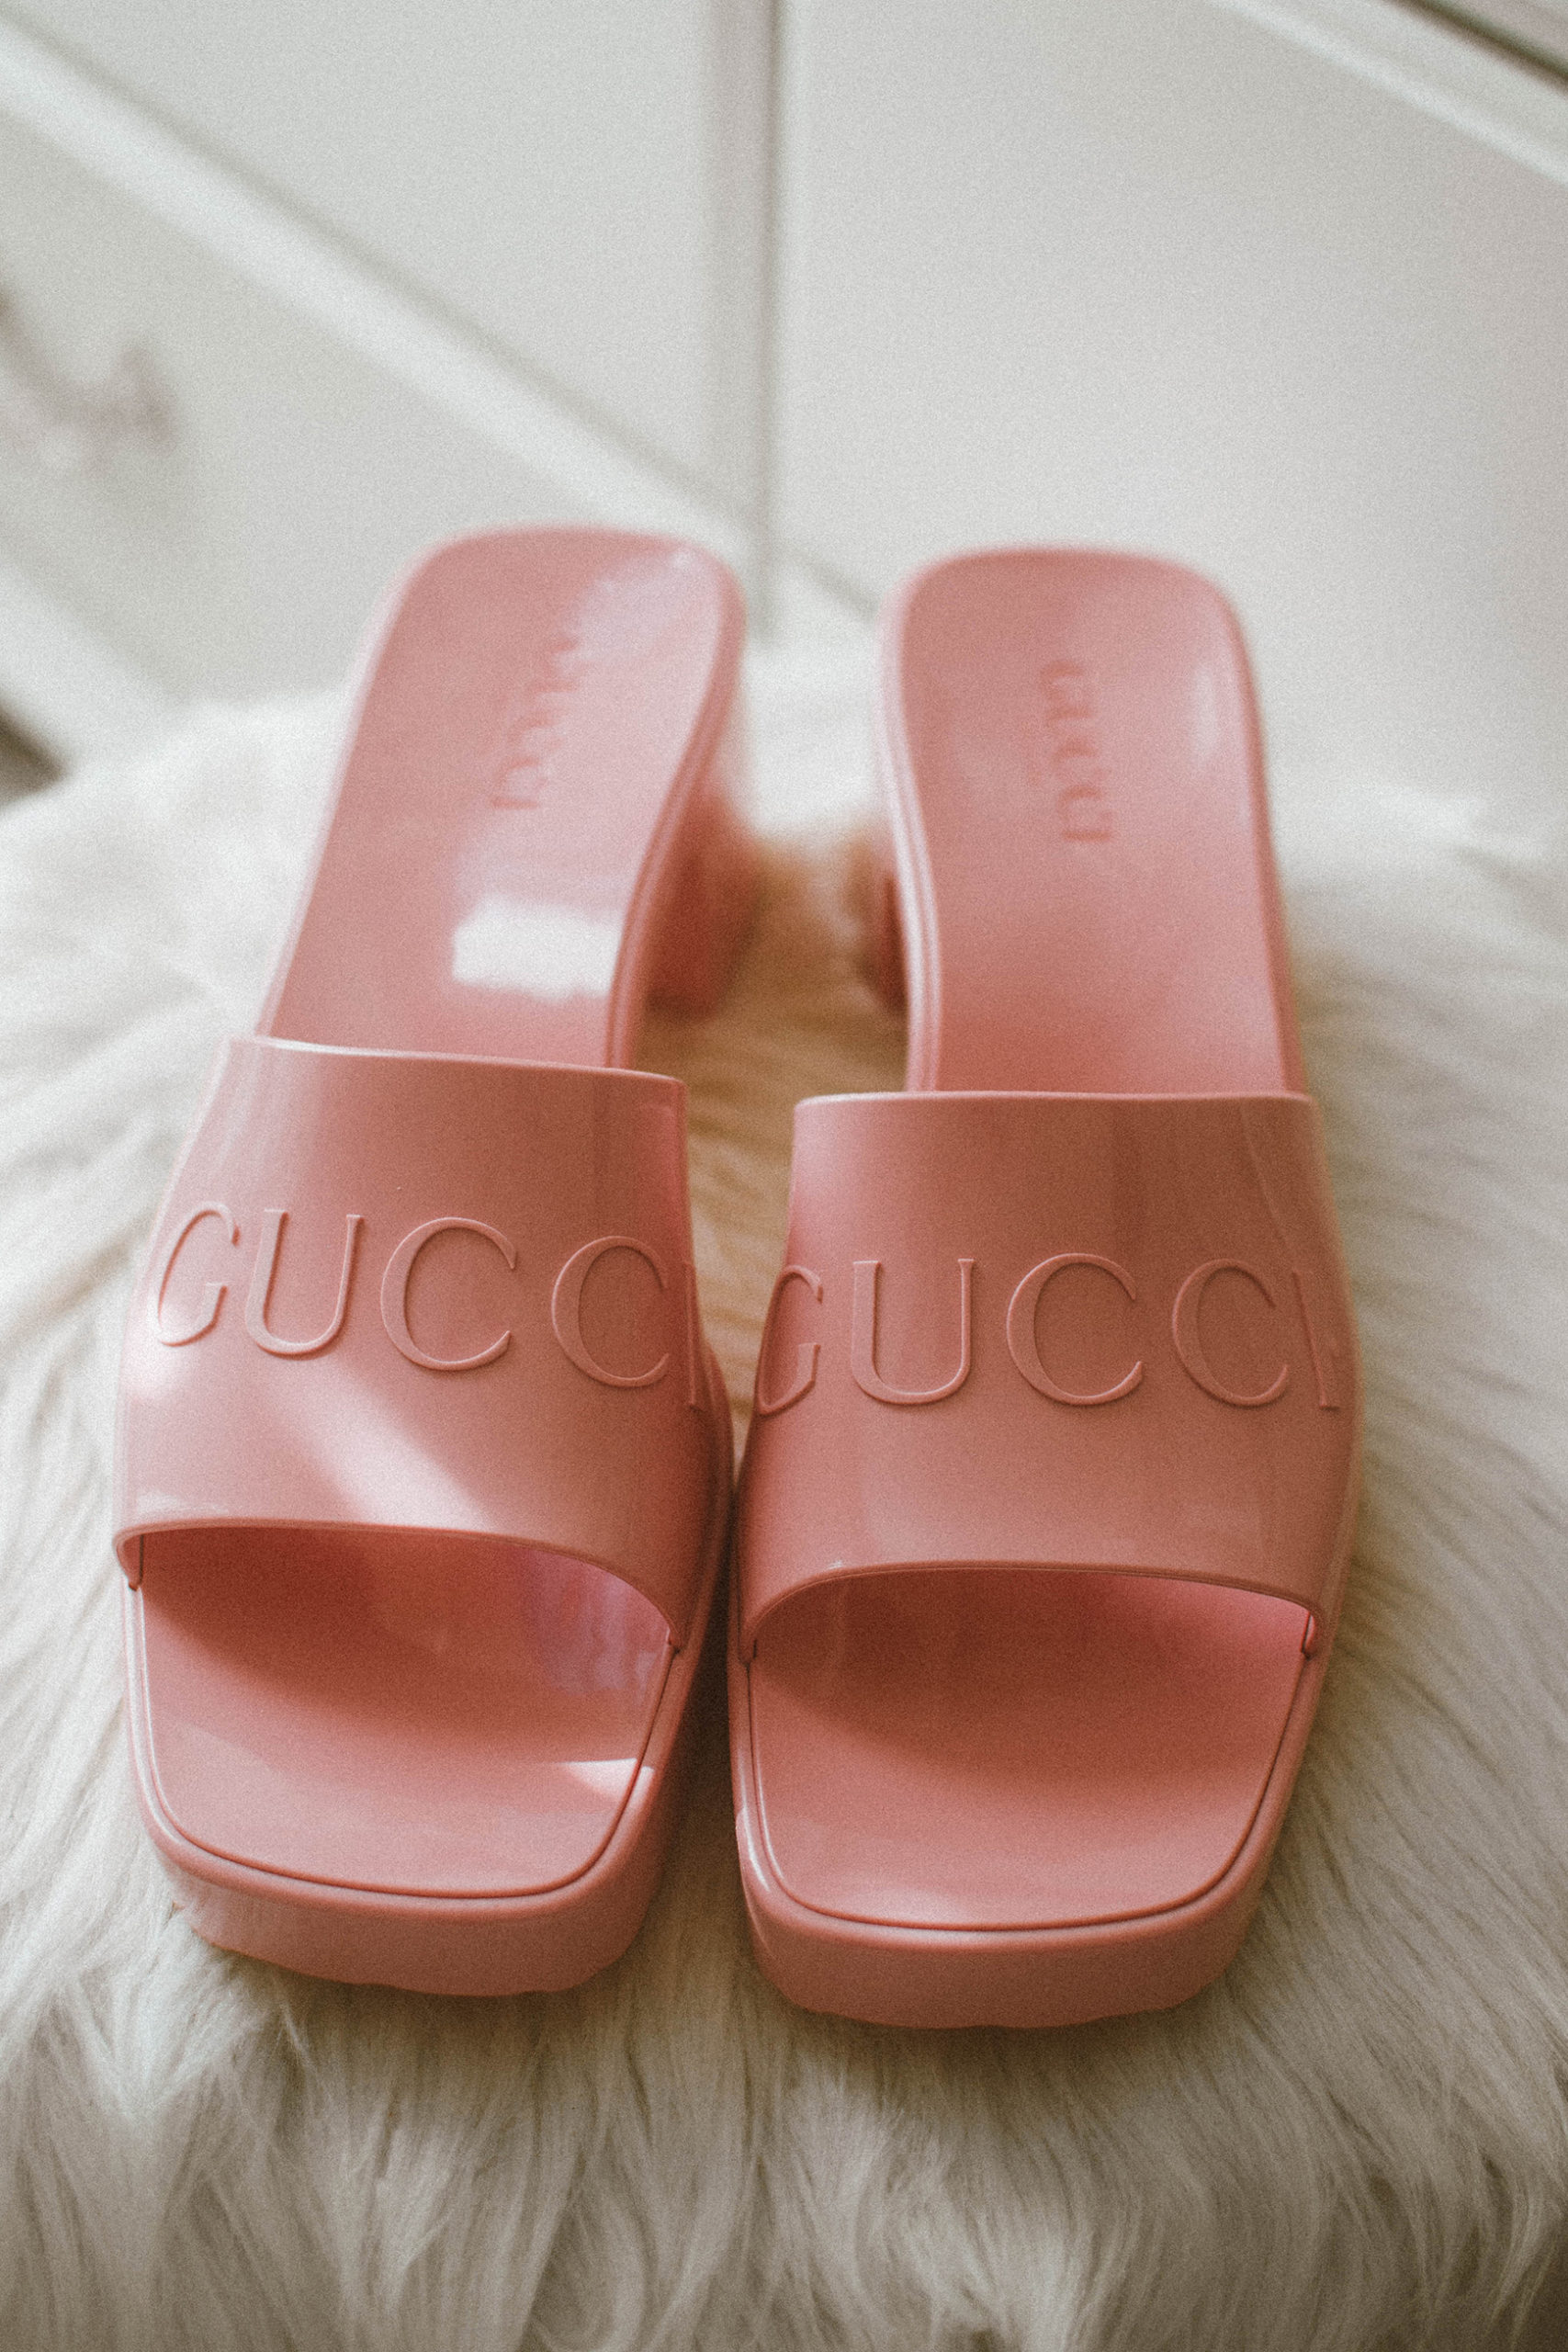 pink rubber gucci slides